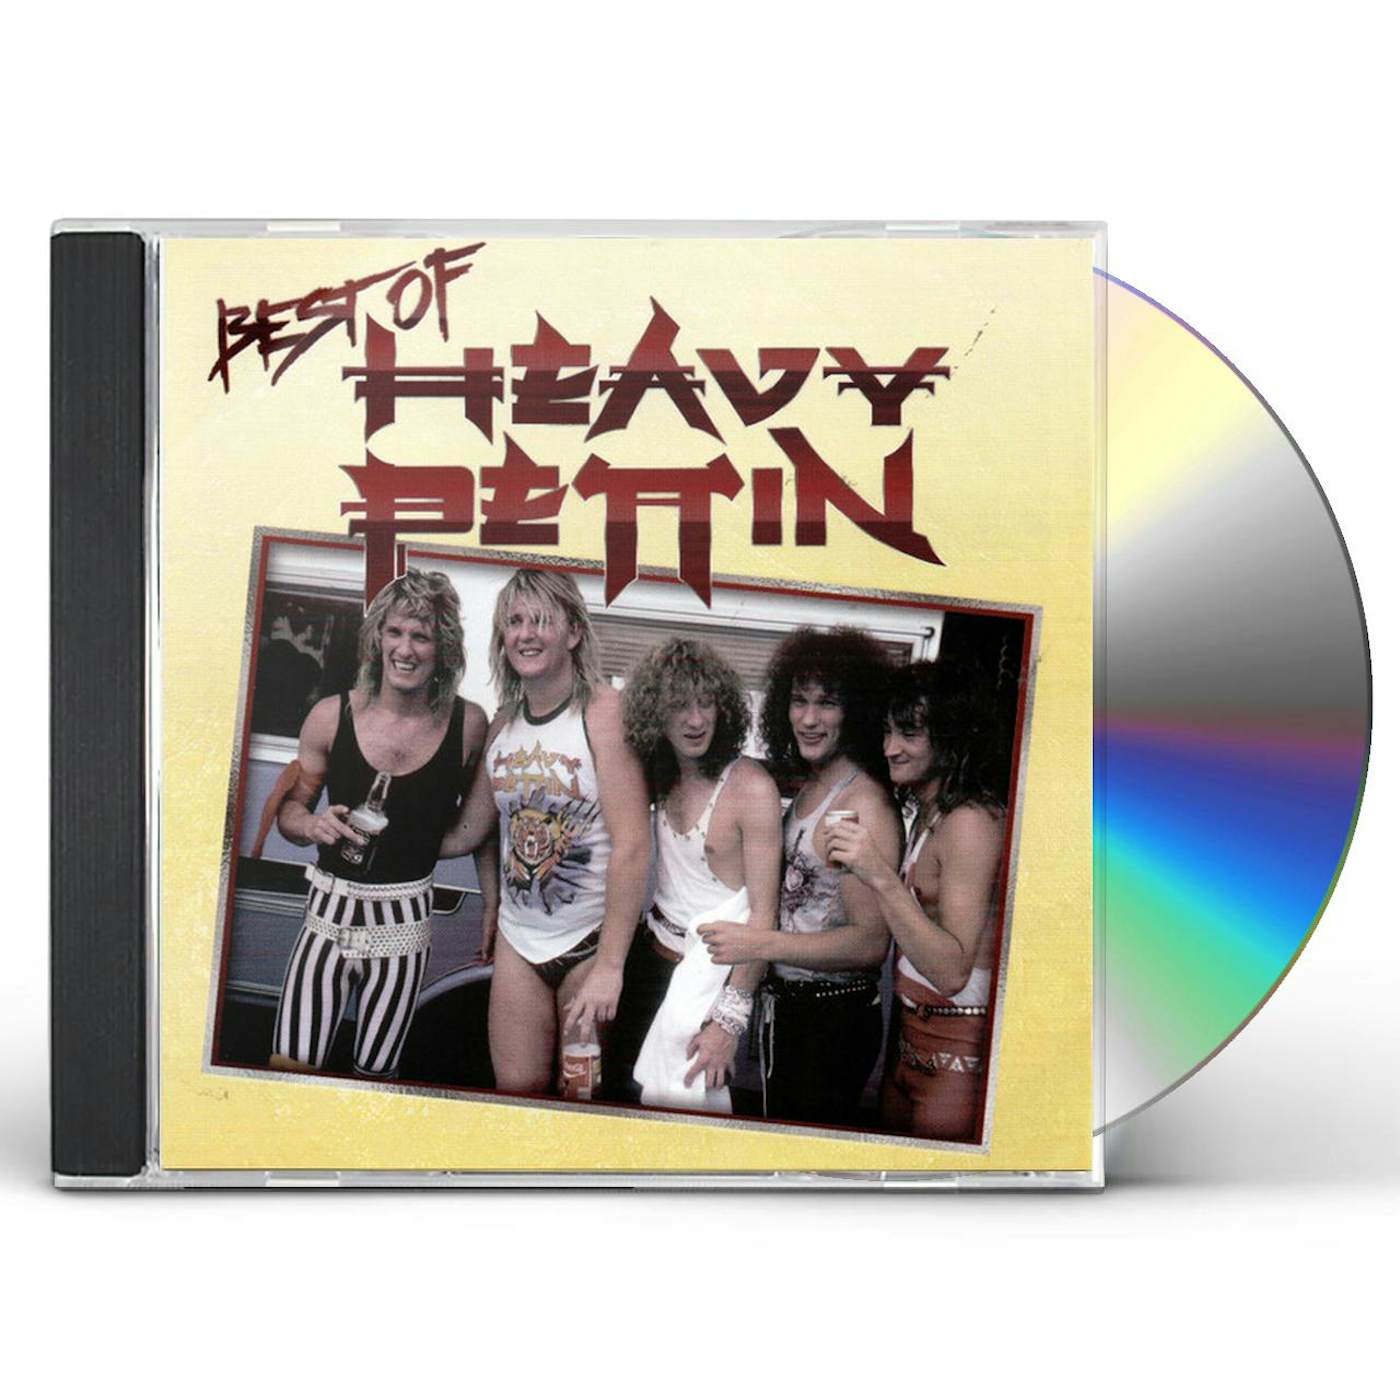 Heavy Pettin BEST OF CD